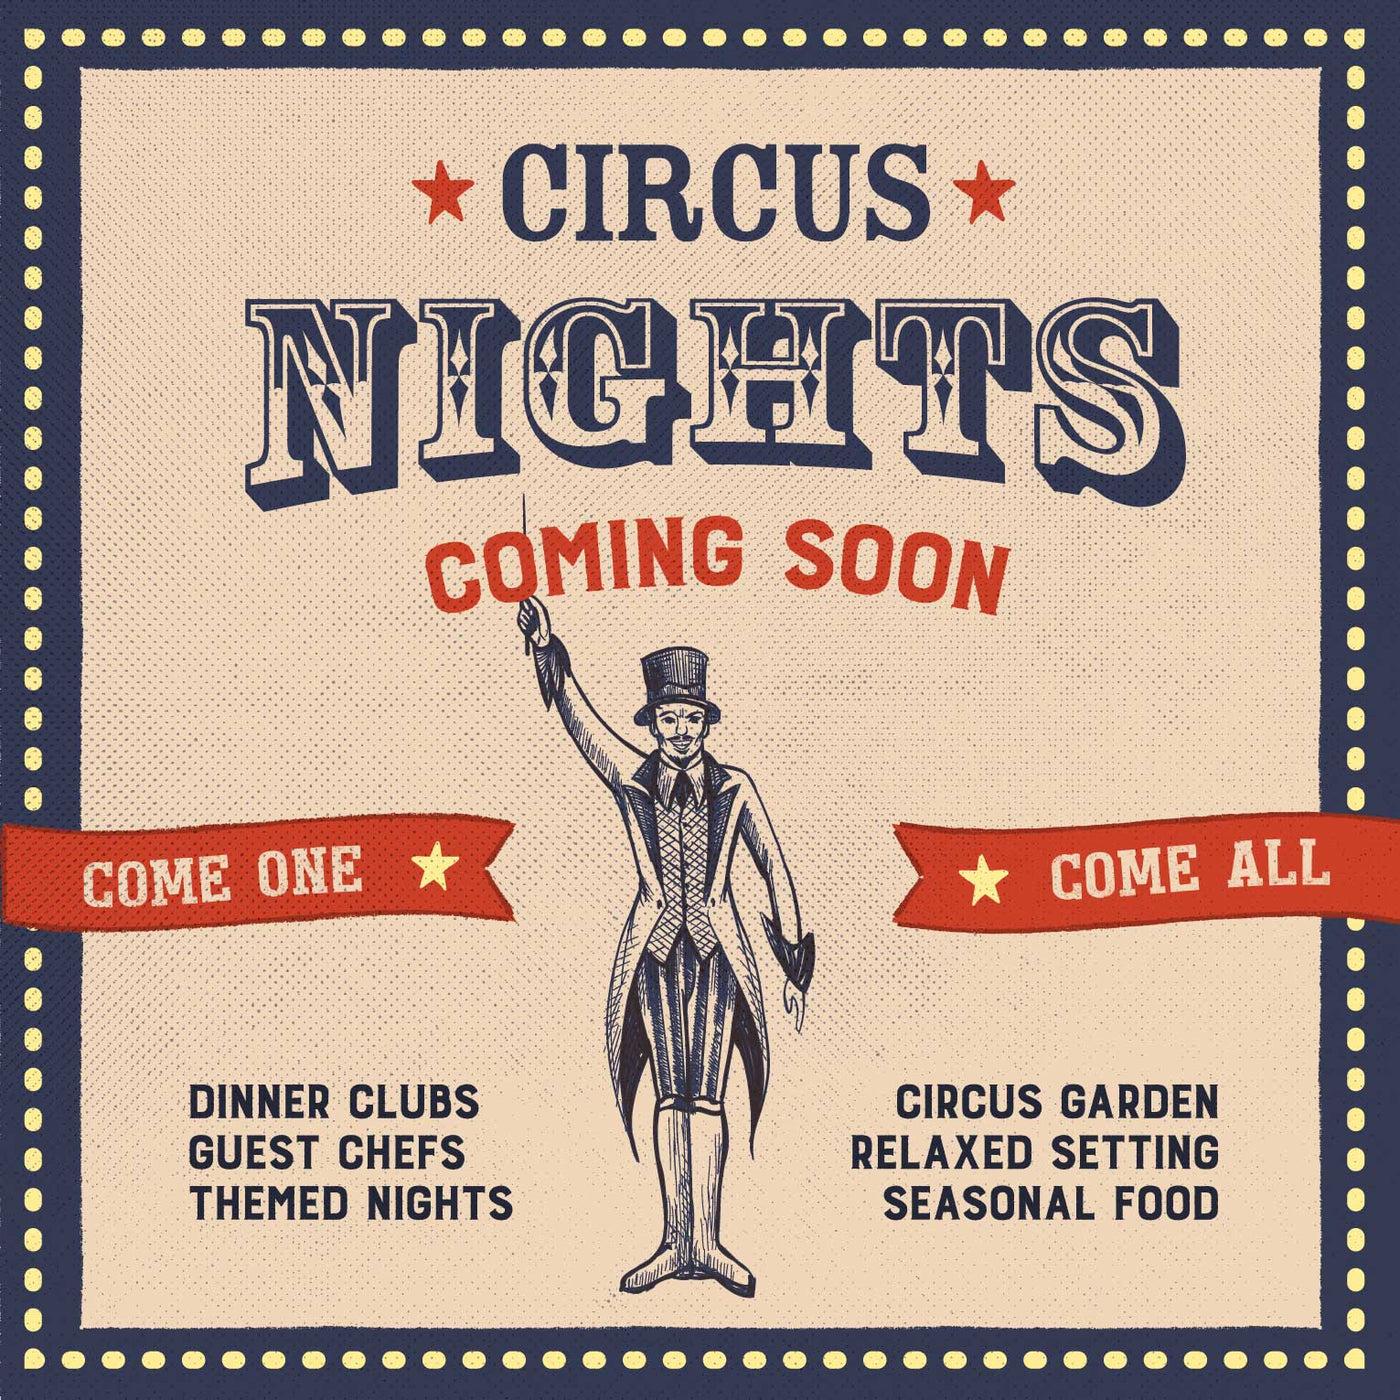 Circus Nights - Coming Soon!